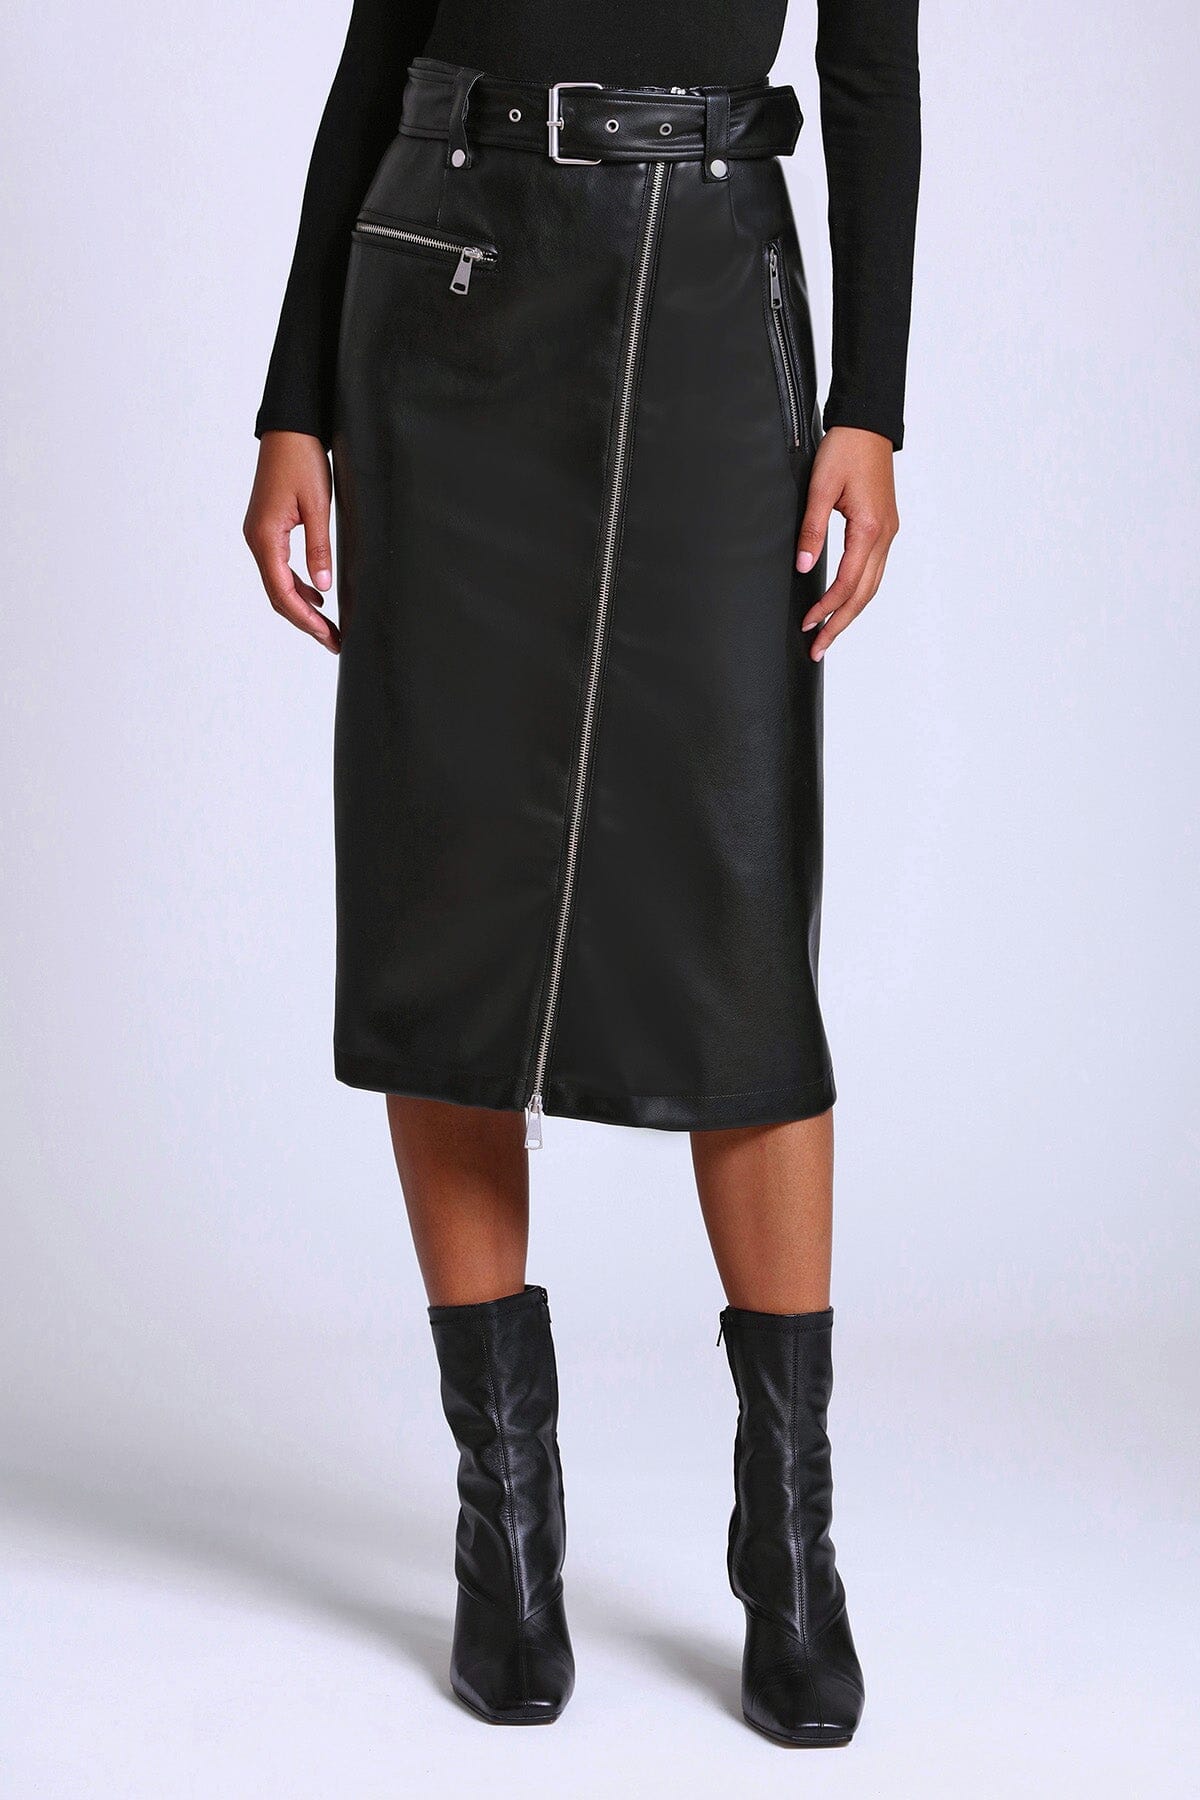 Black faux leather long moto below knee slim skirt by Avec Les Filles fashion skirts